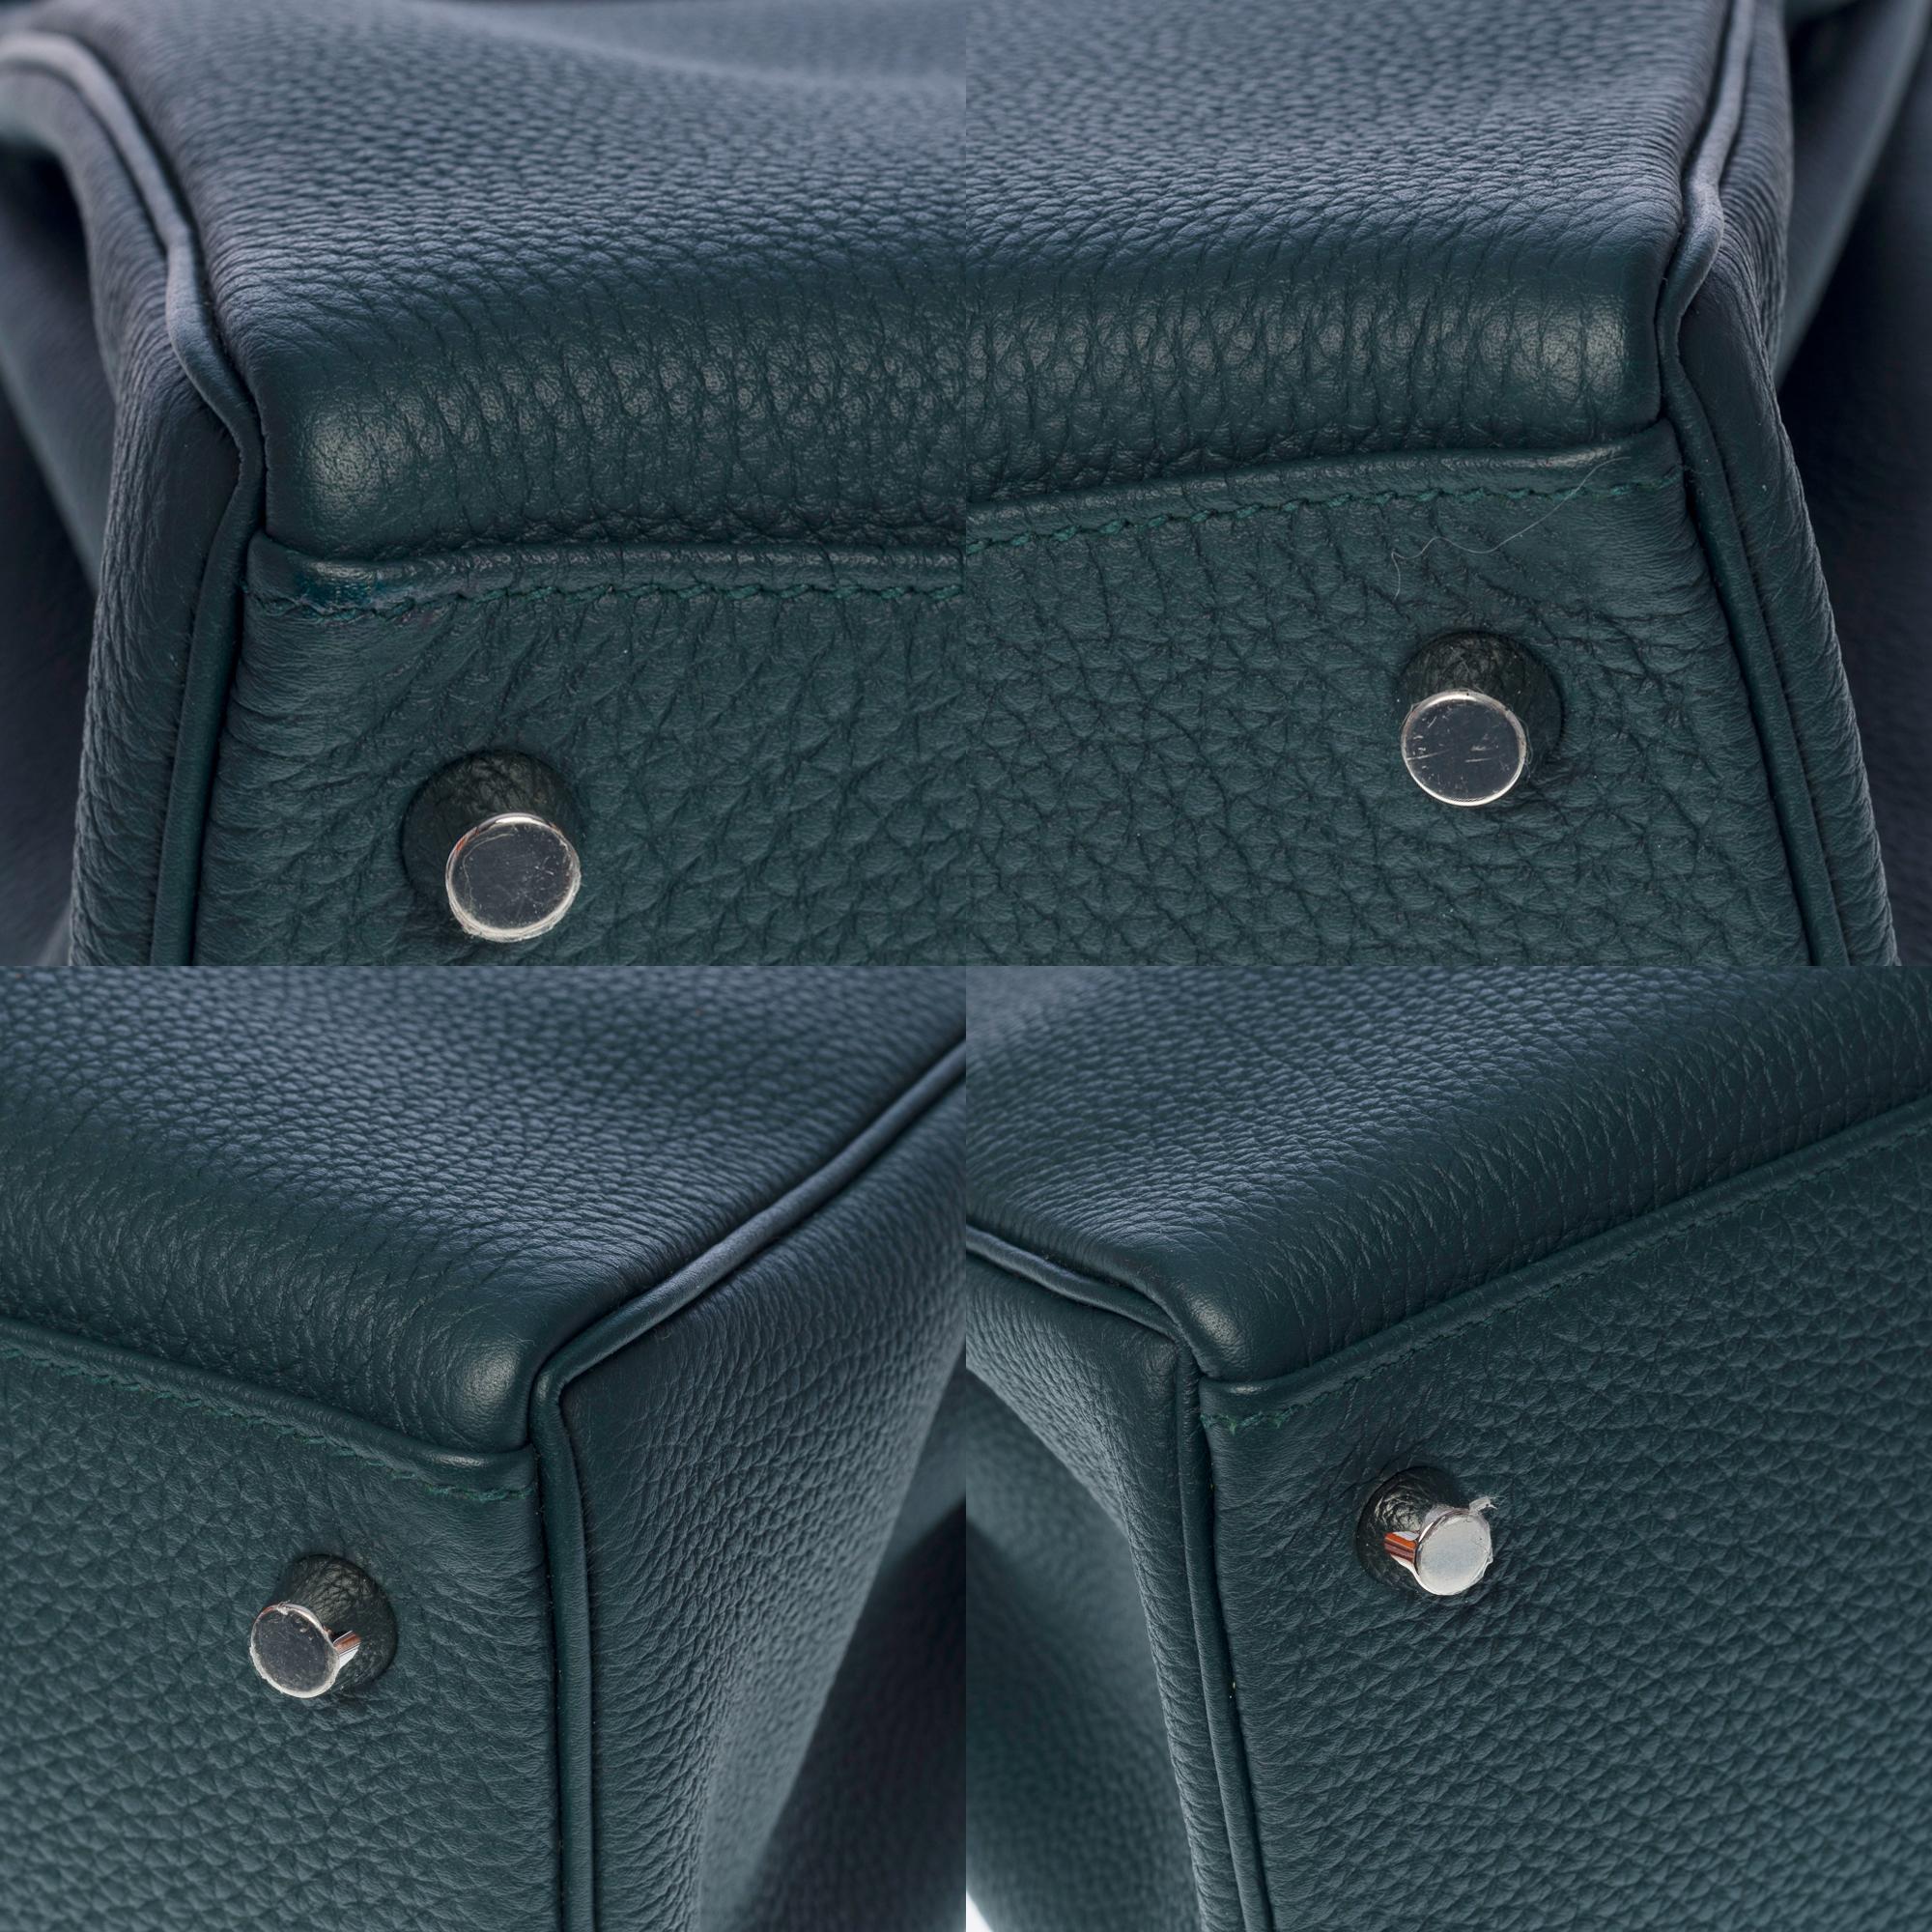 New Hermès Kelly 32 retourne handbag strap in Green Cypres Togo leather, SHW 7